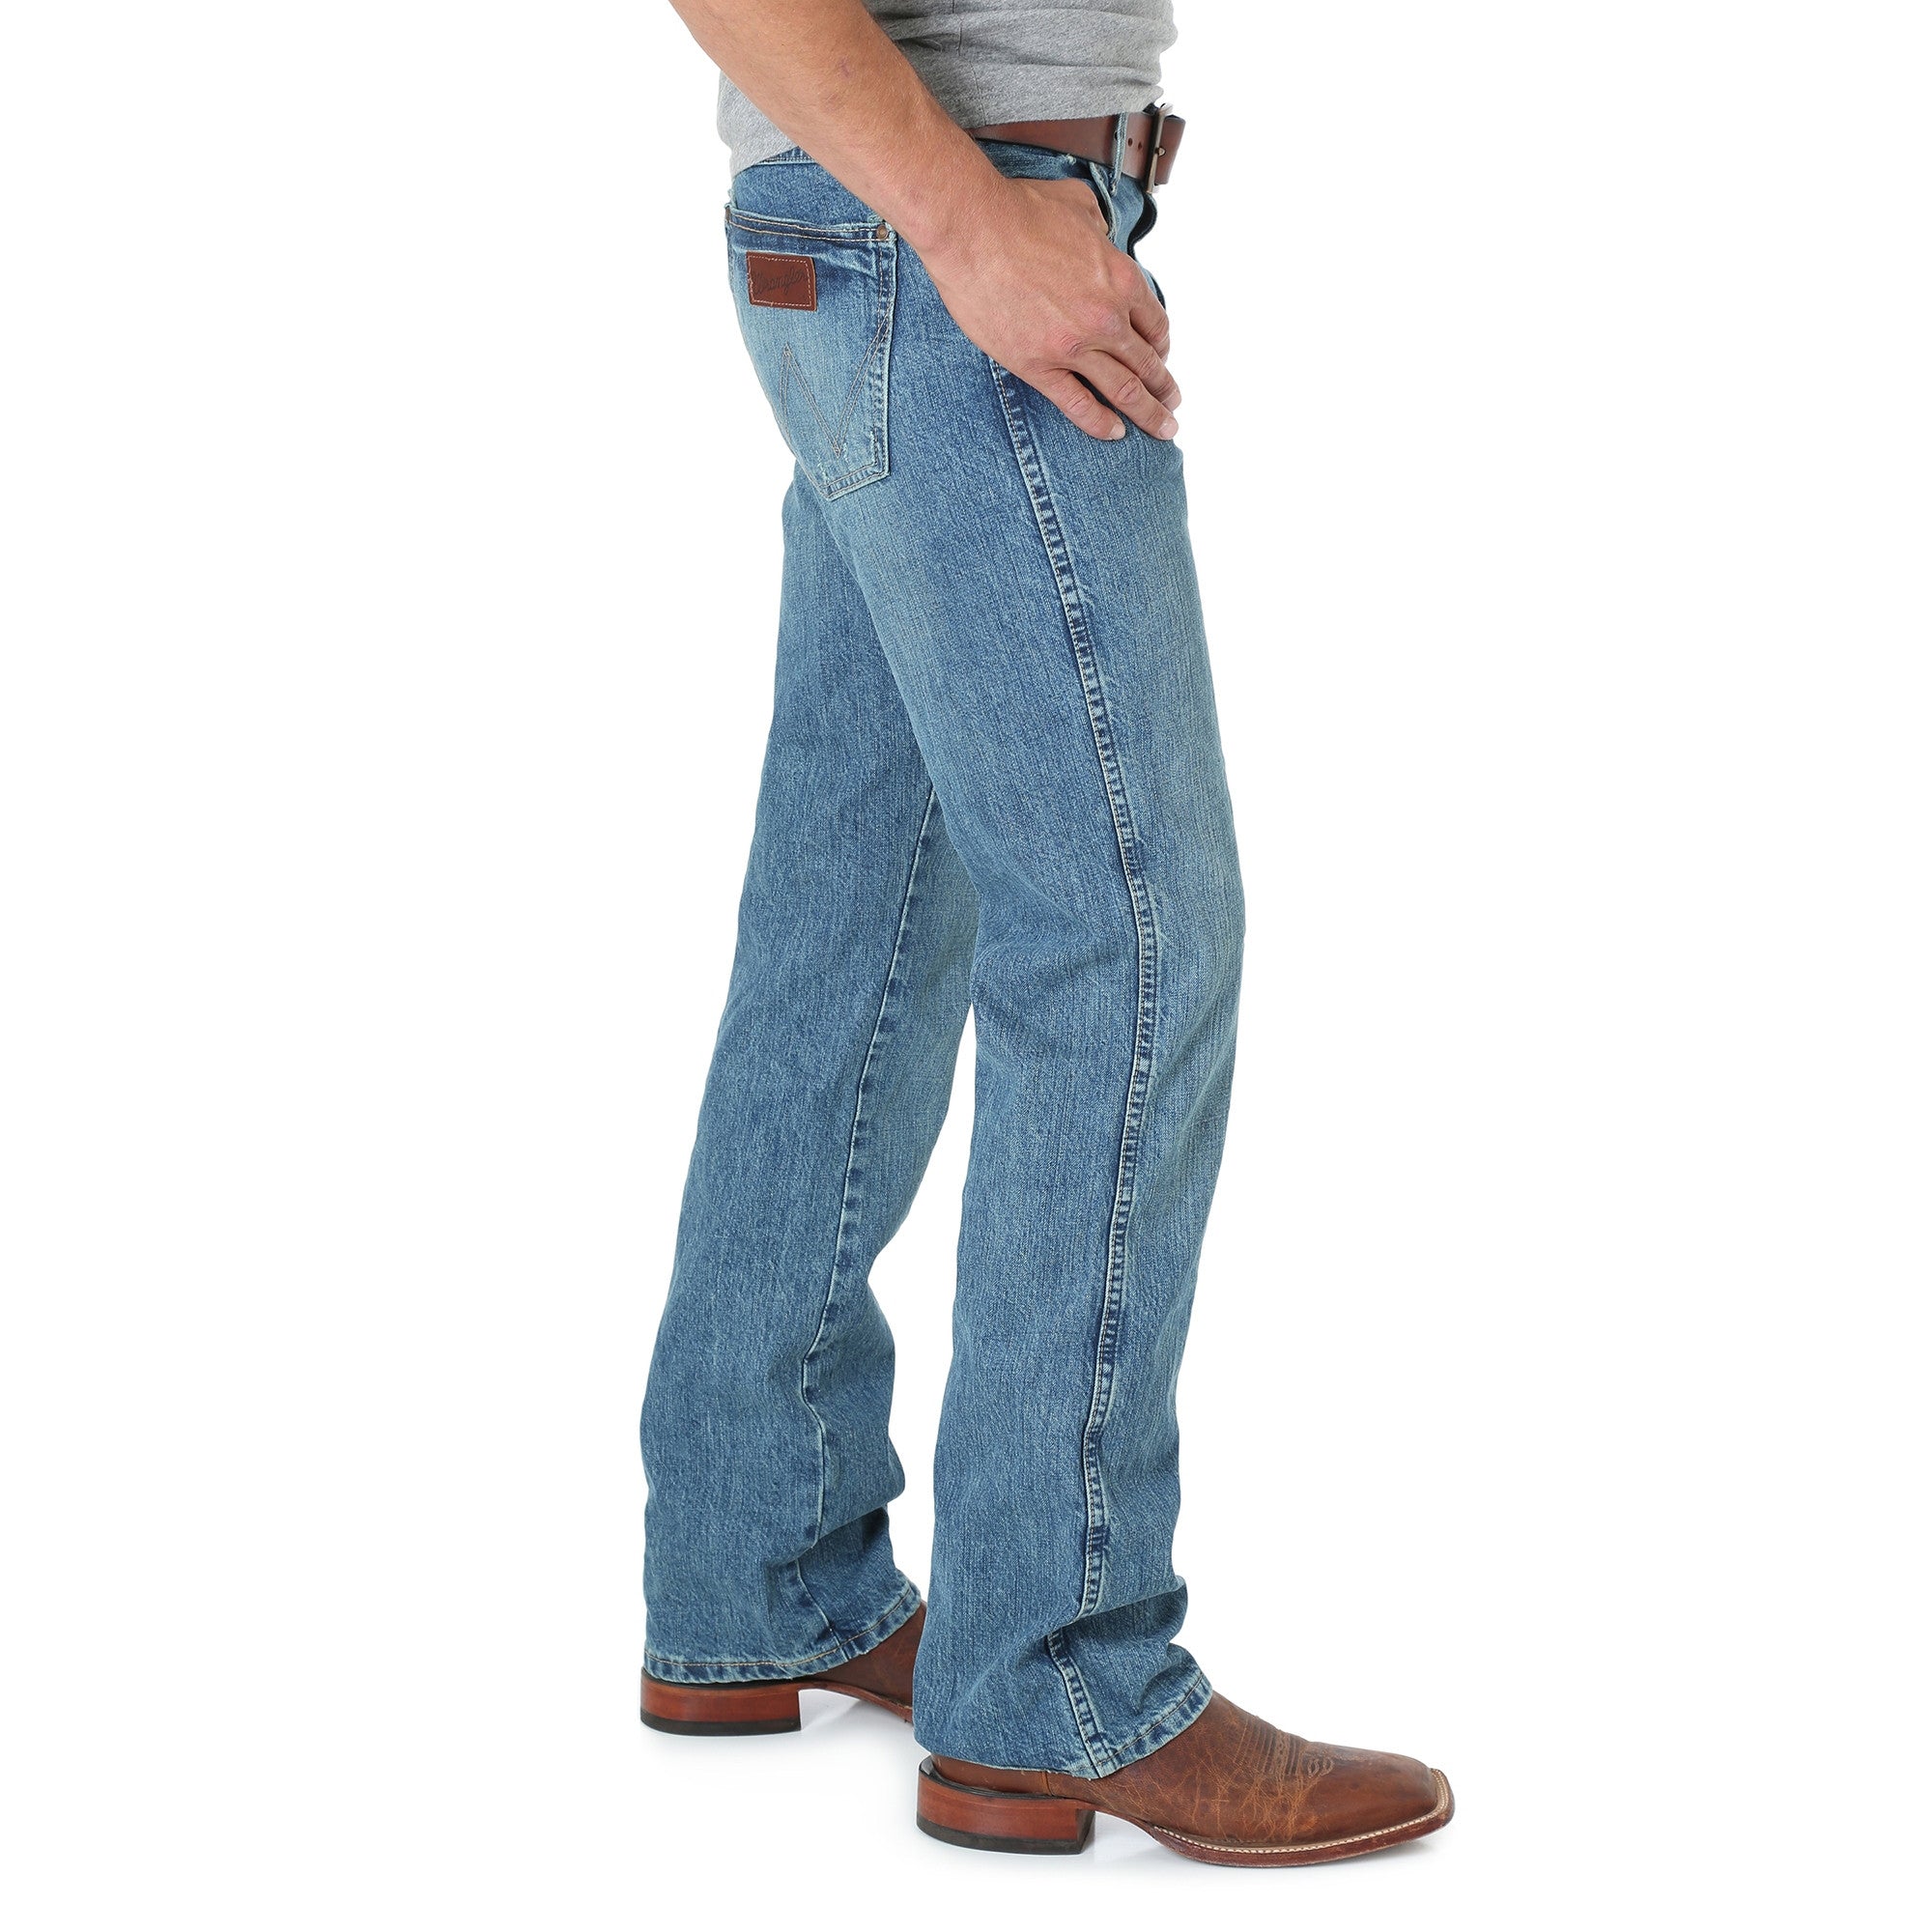 wrangler retro jeans jason aldean